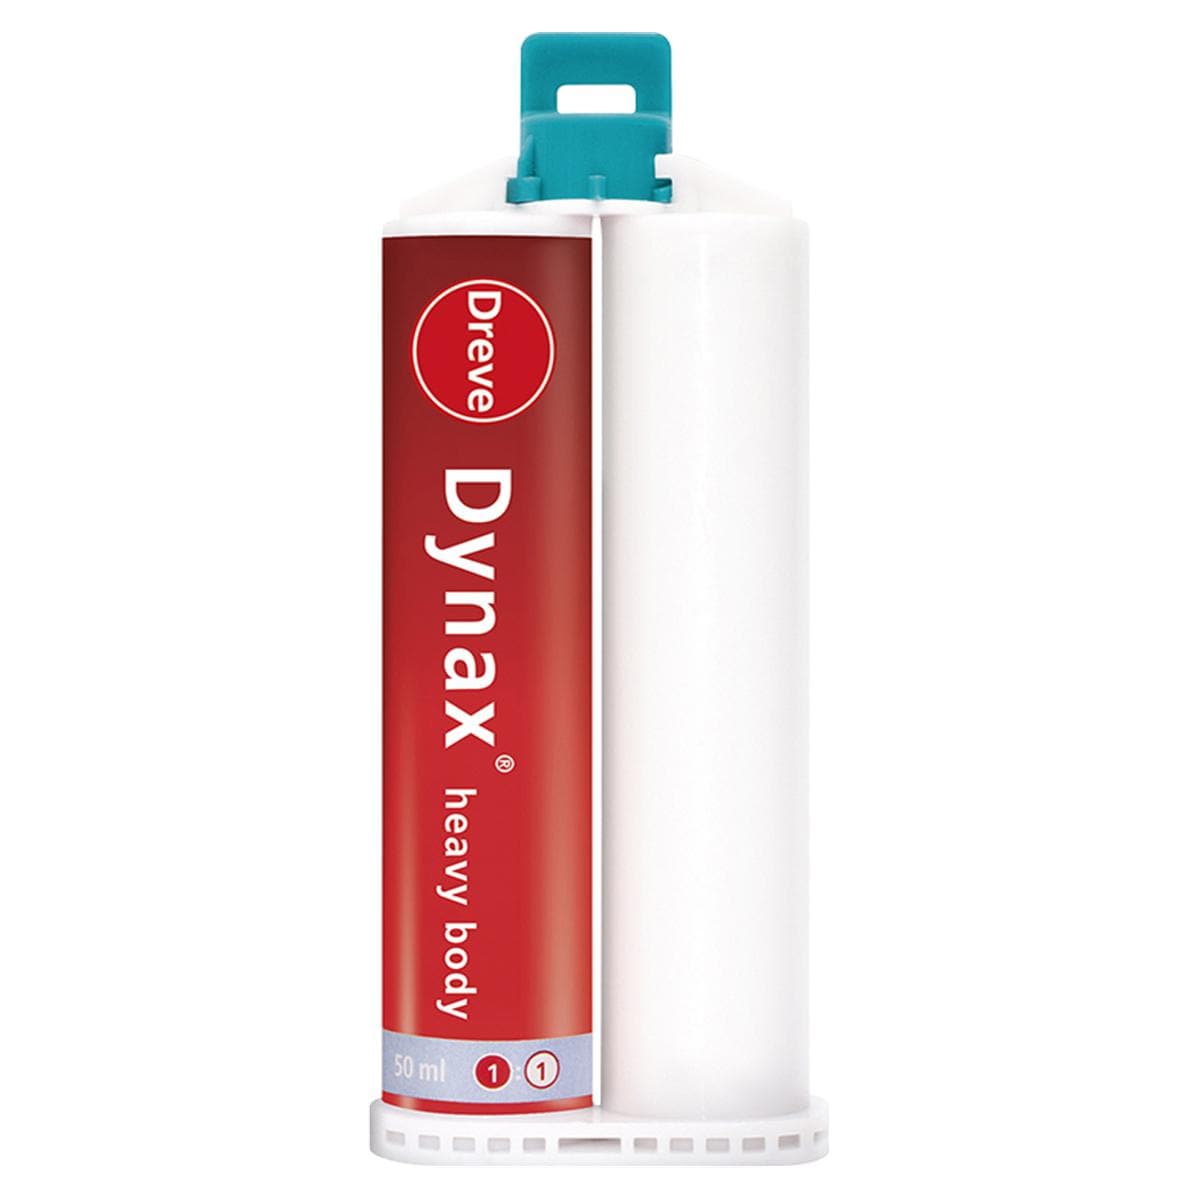 Dynax® heavy body - Packung 8 x 50 ml